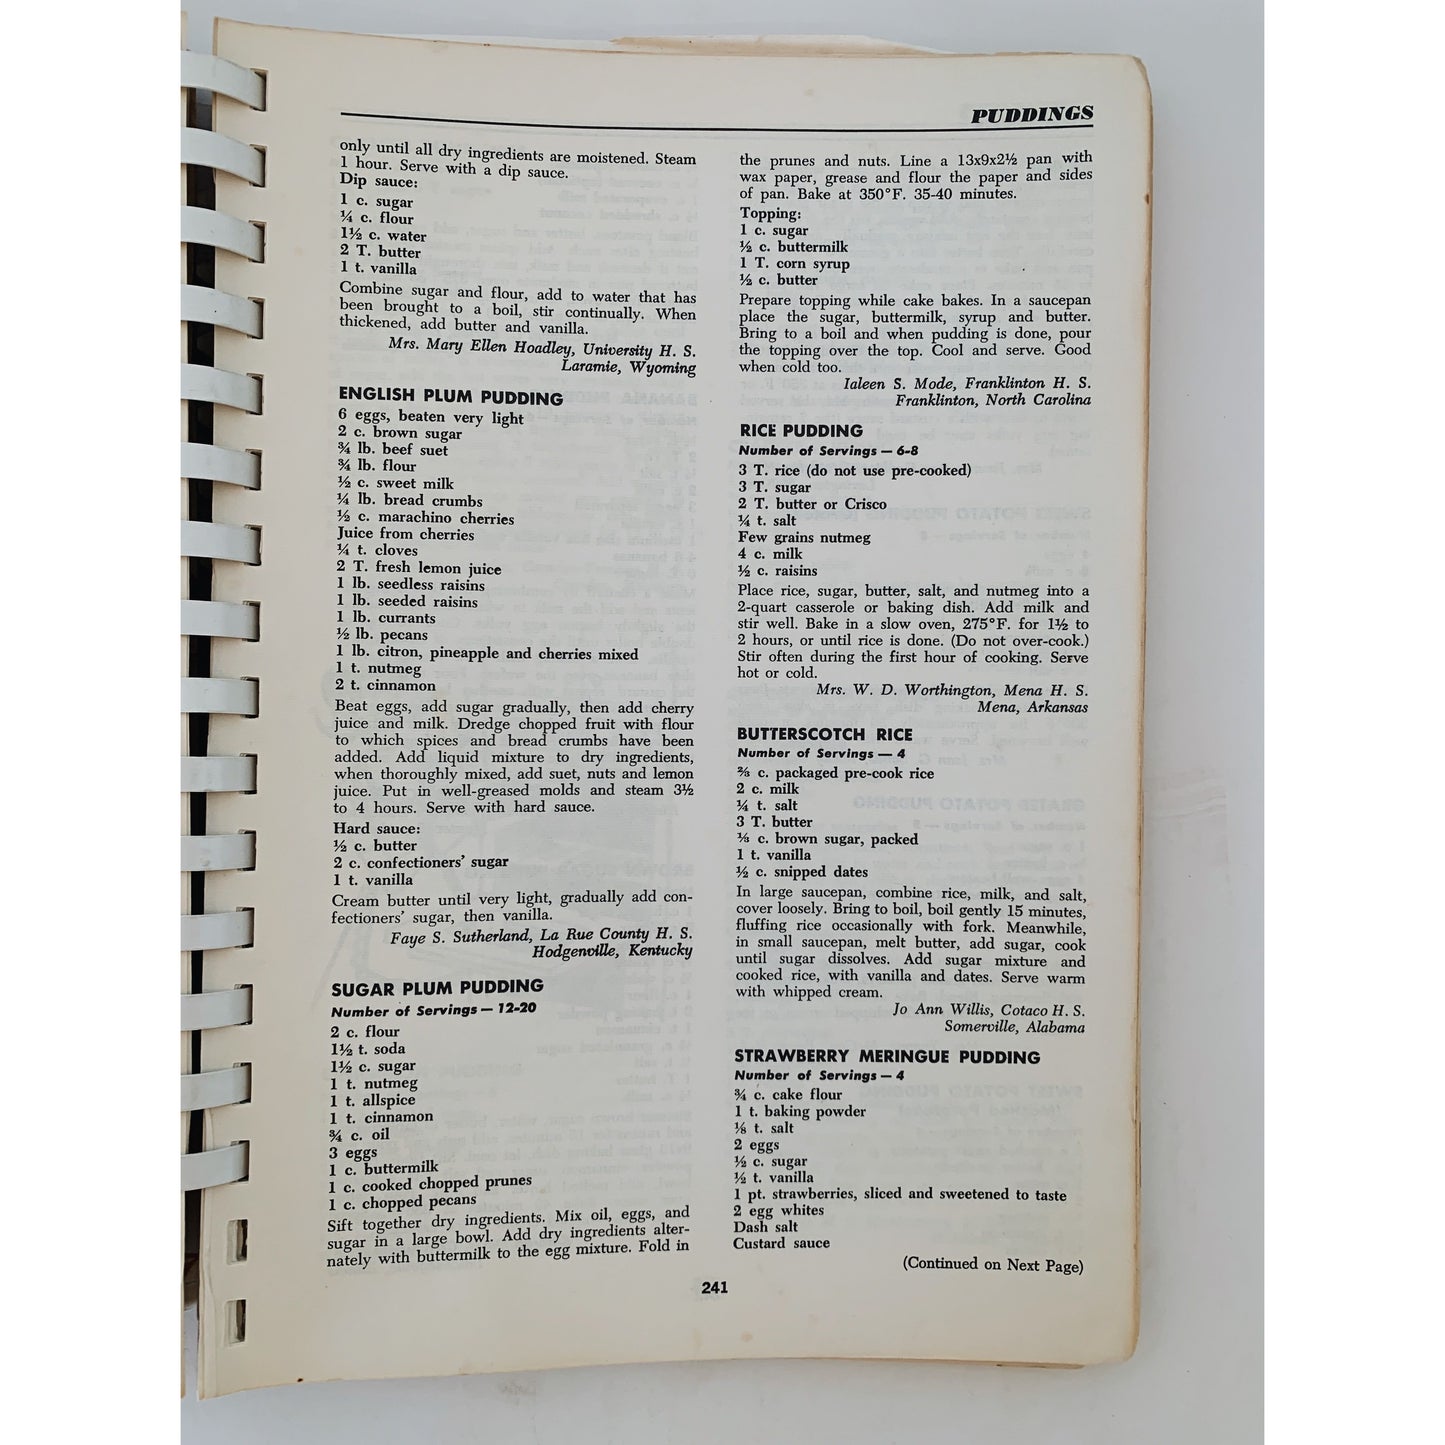 Favorite Recipes of Home Economics Teachers, 1963